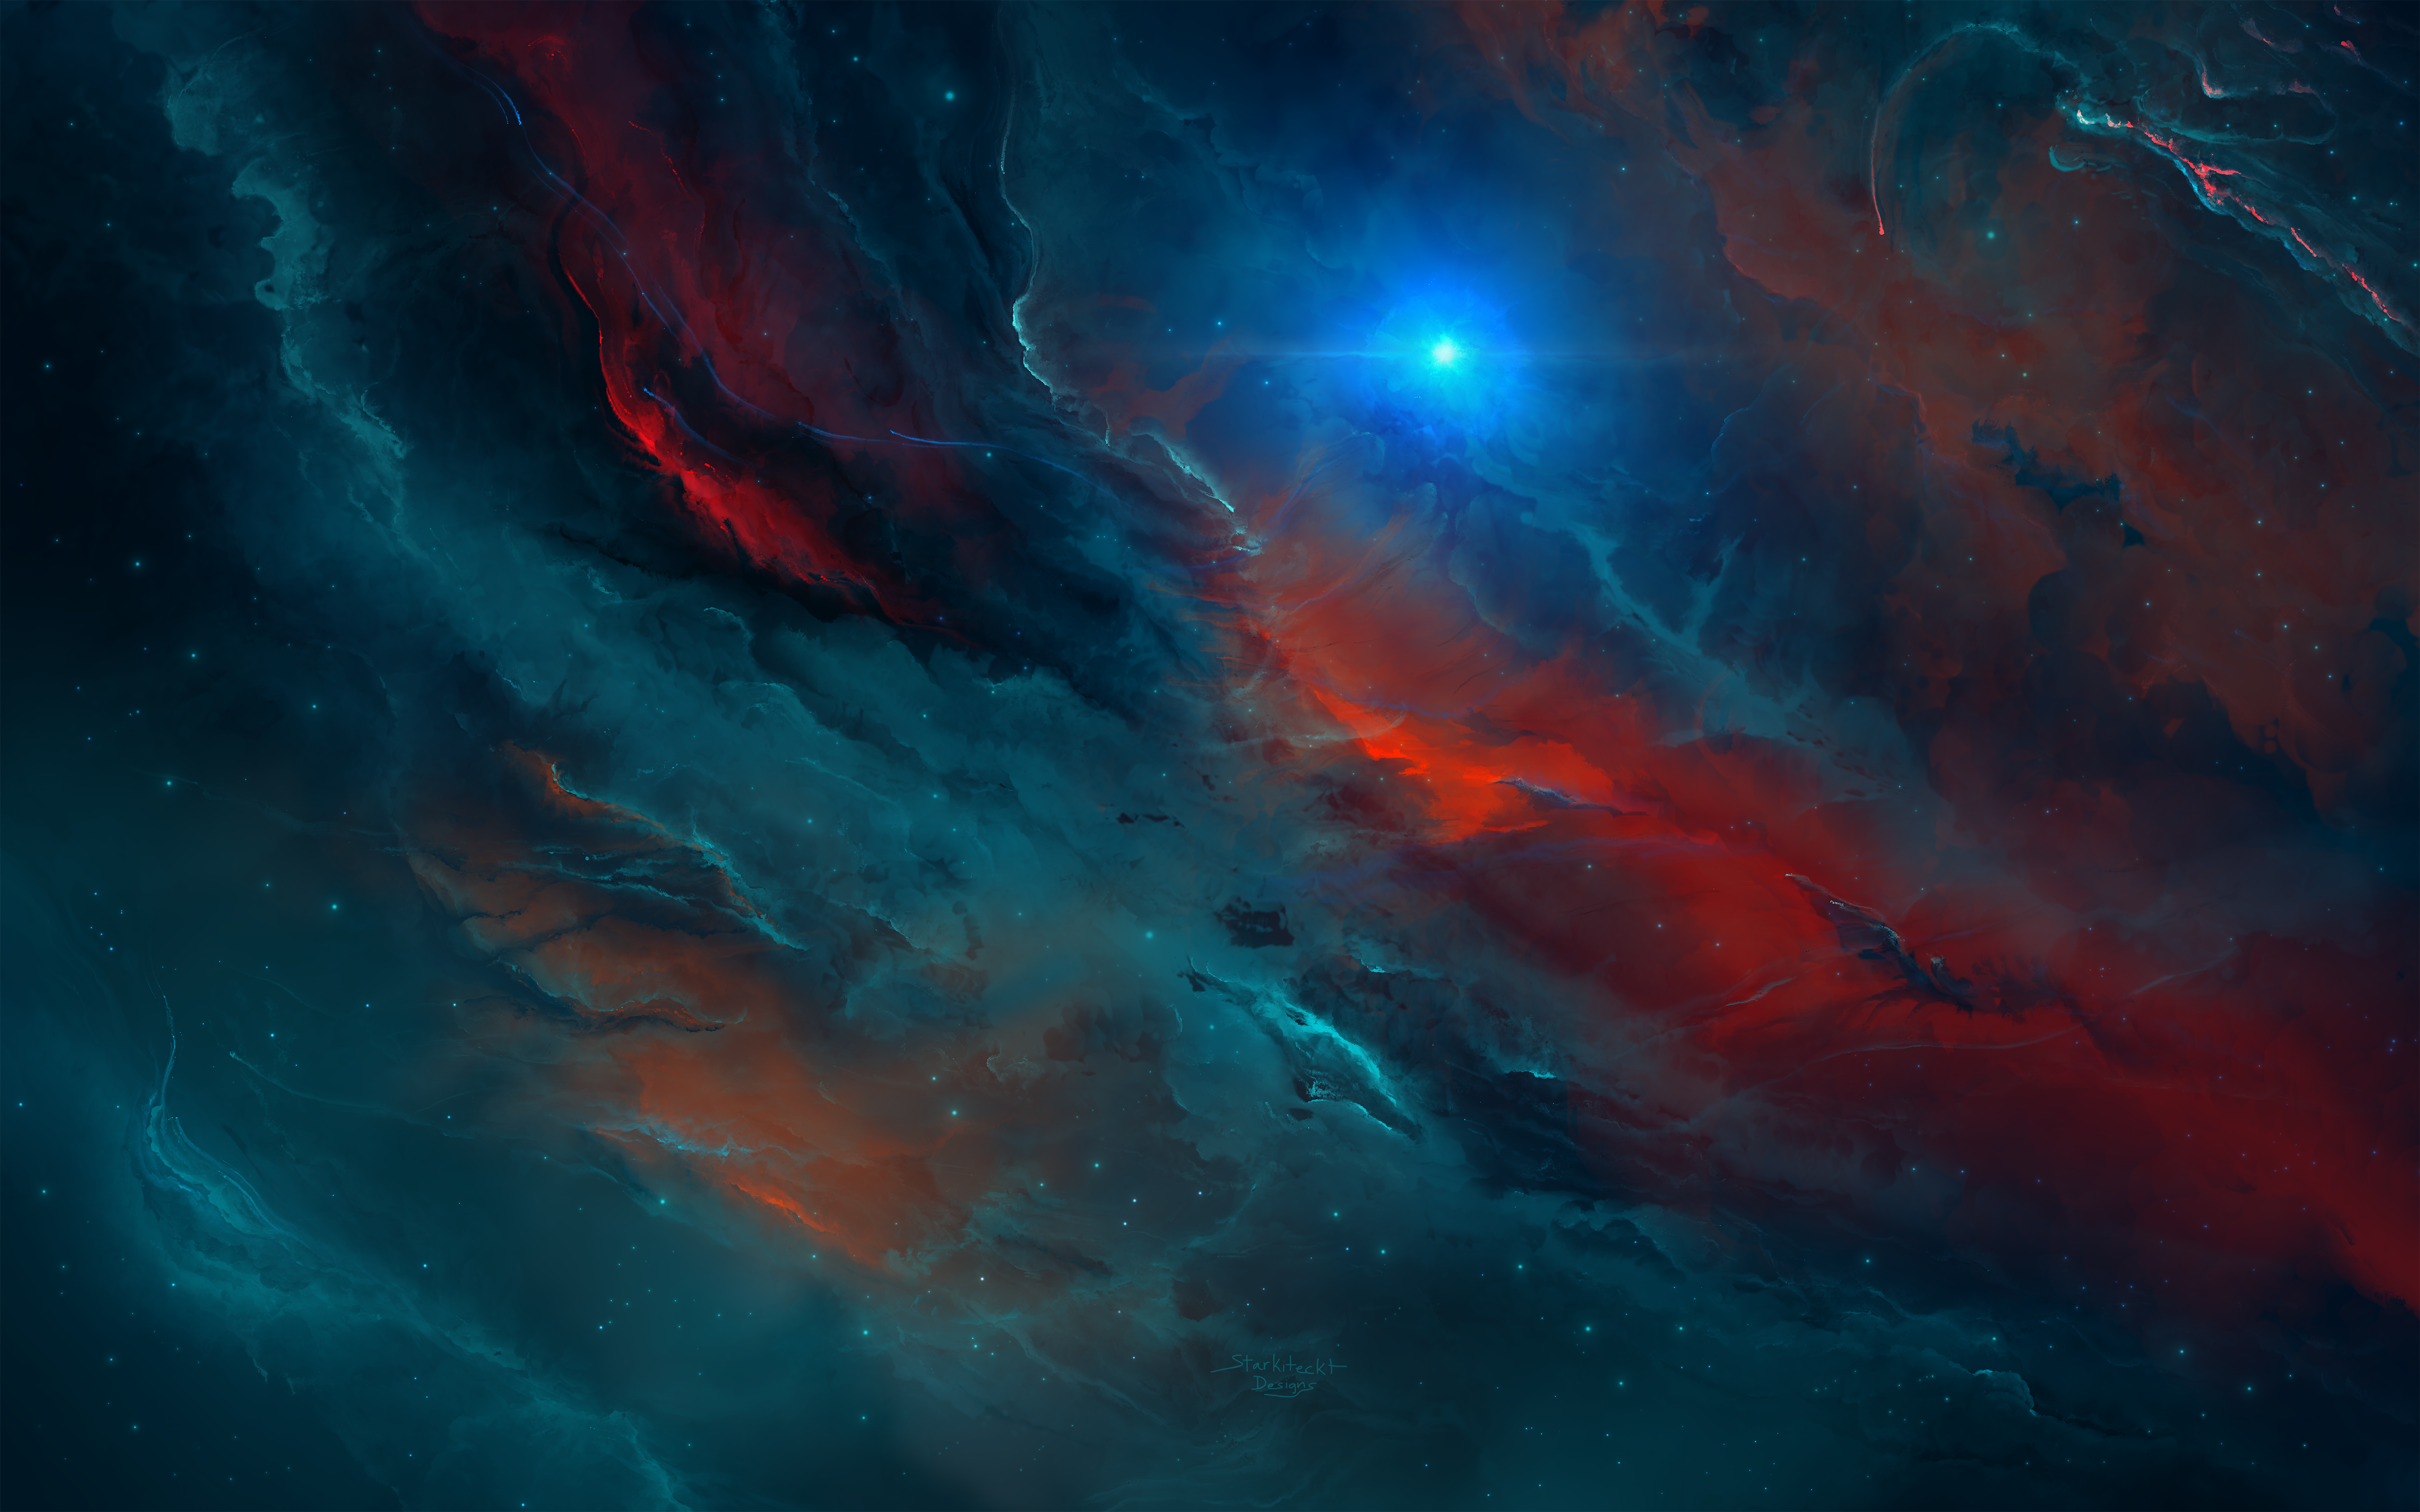 Krauss Nebula by Starkiteckt